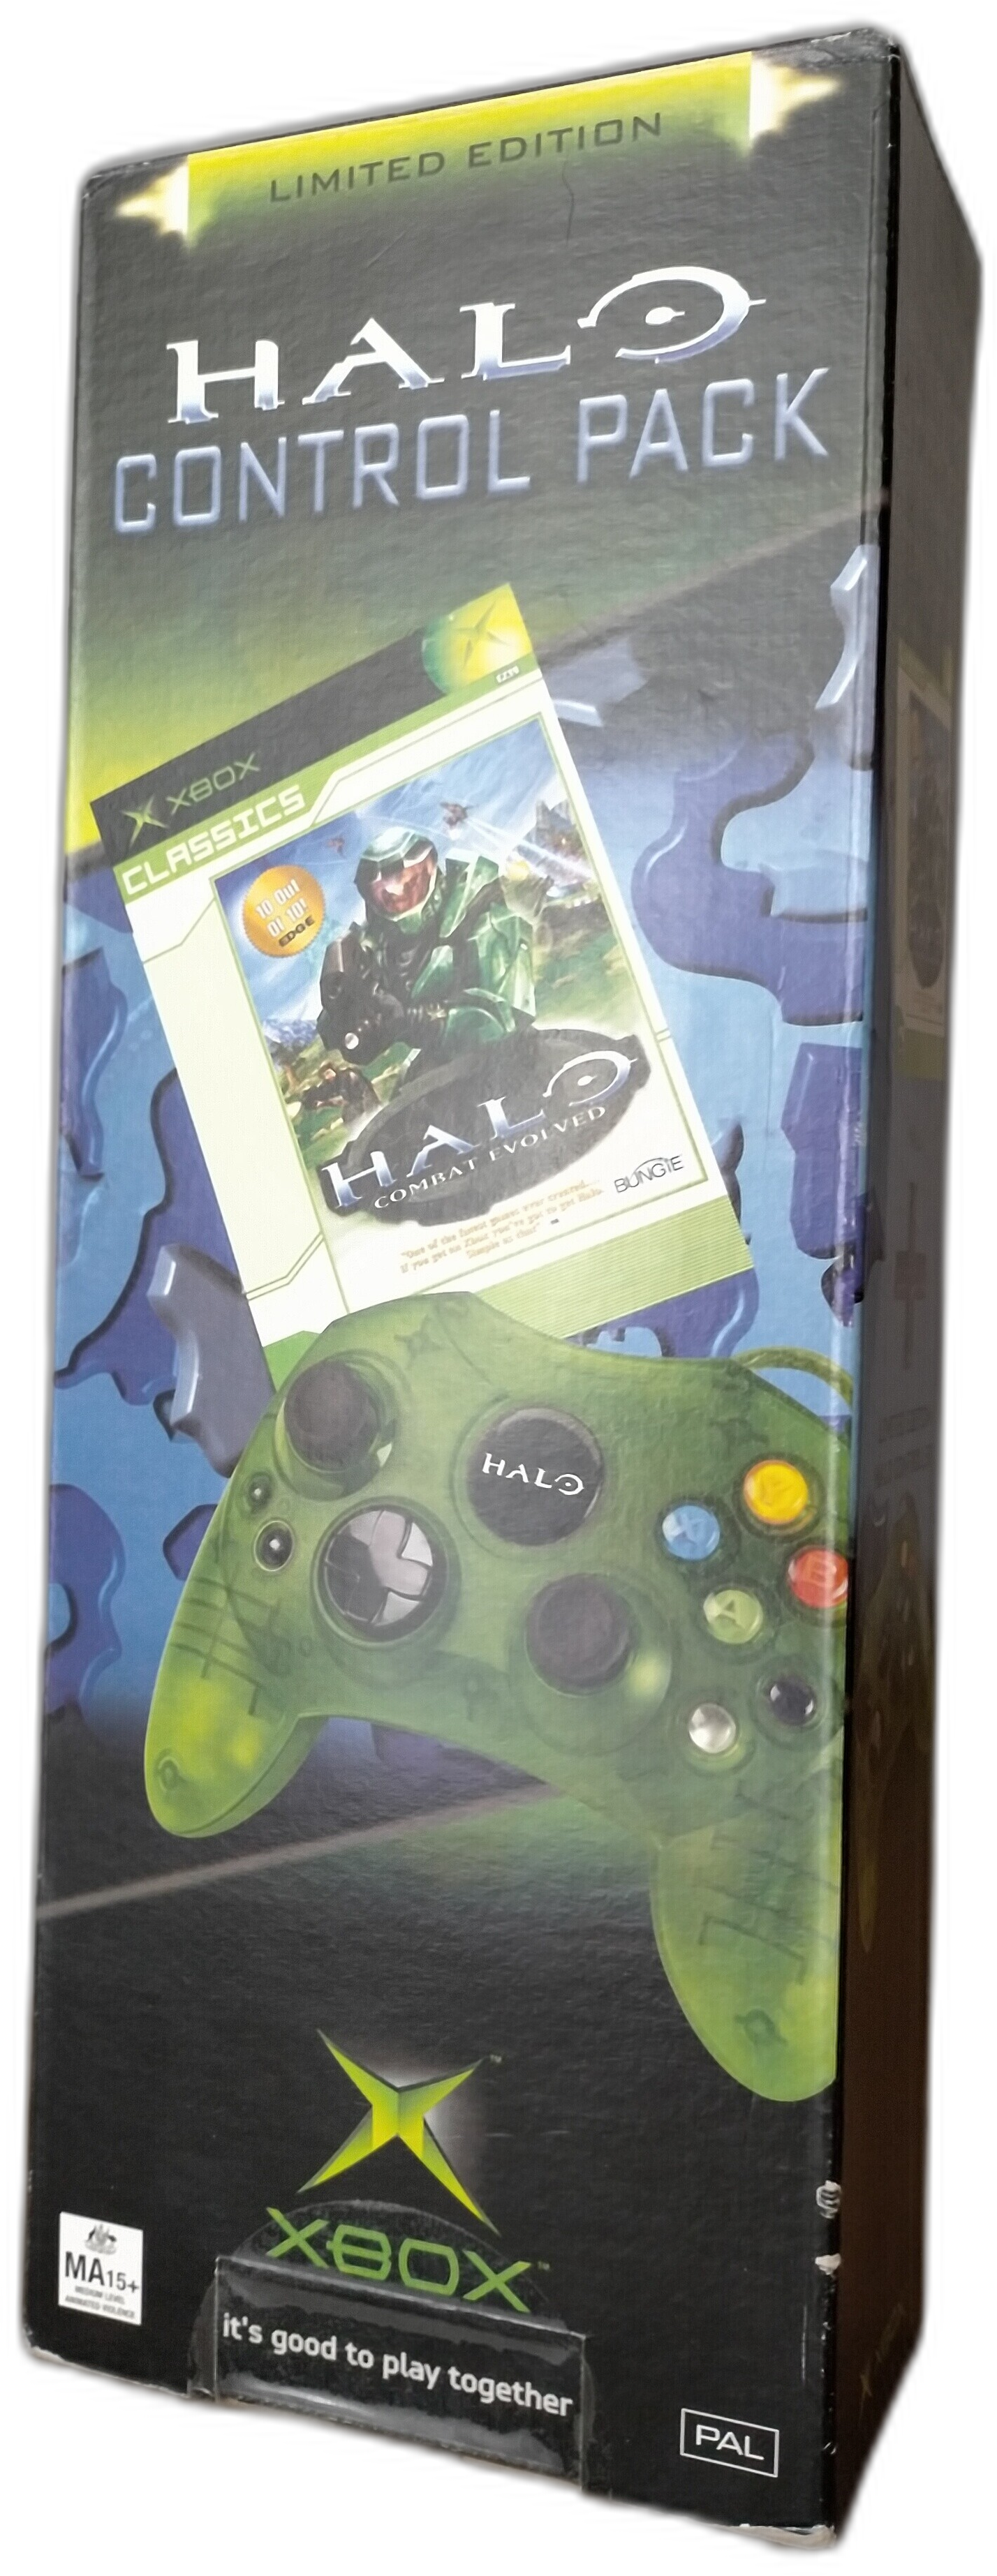  Microsoft Xbox Halo Control Pack